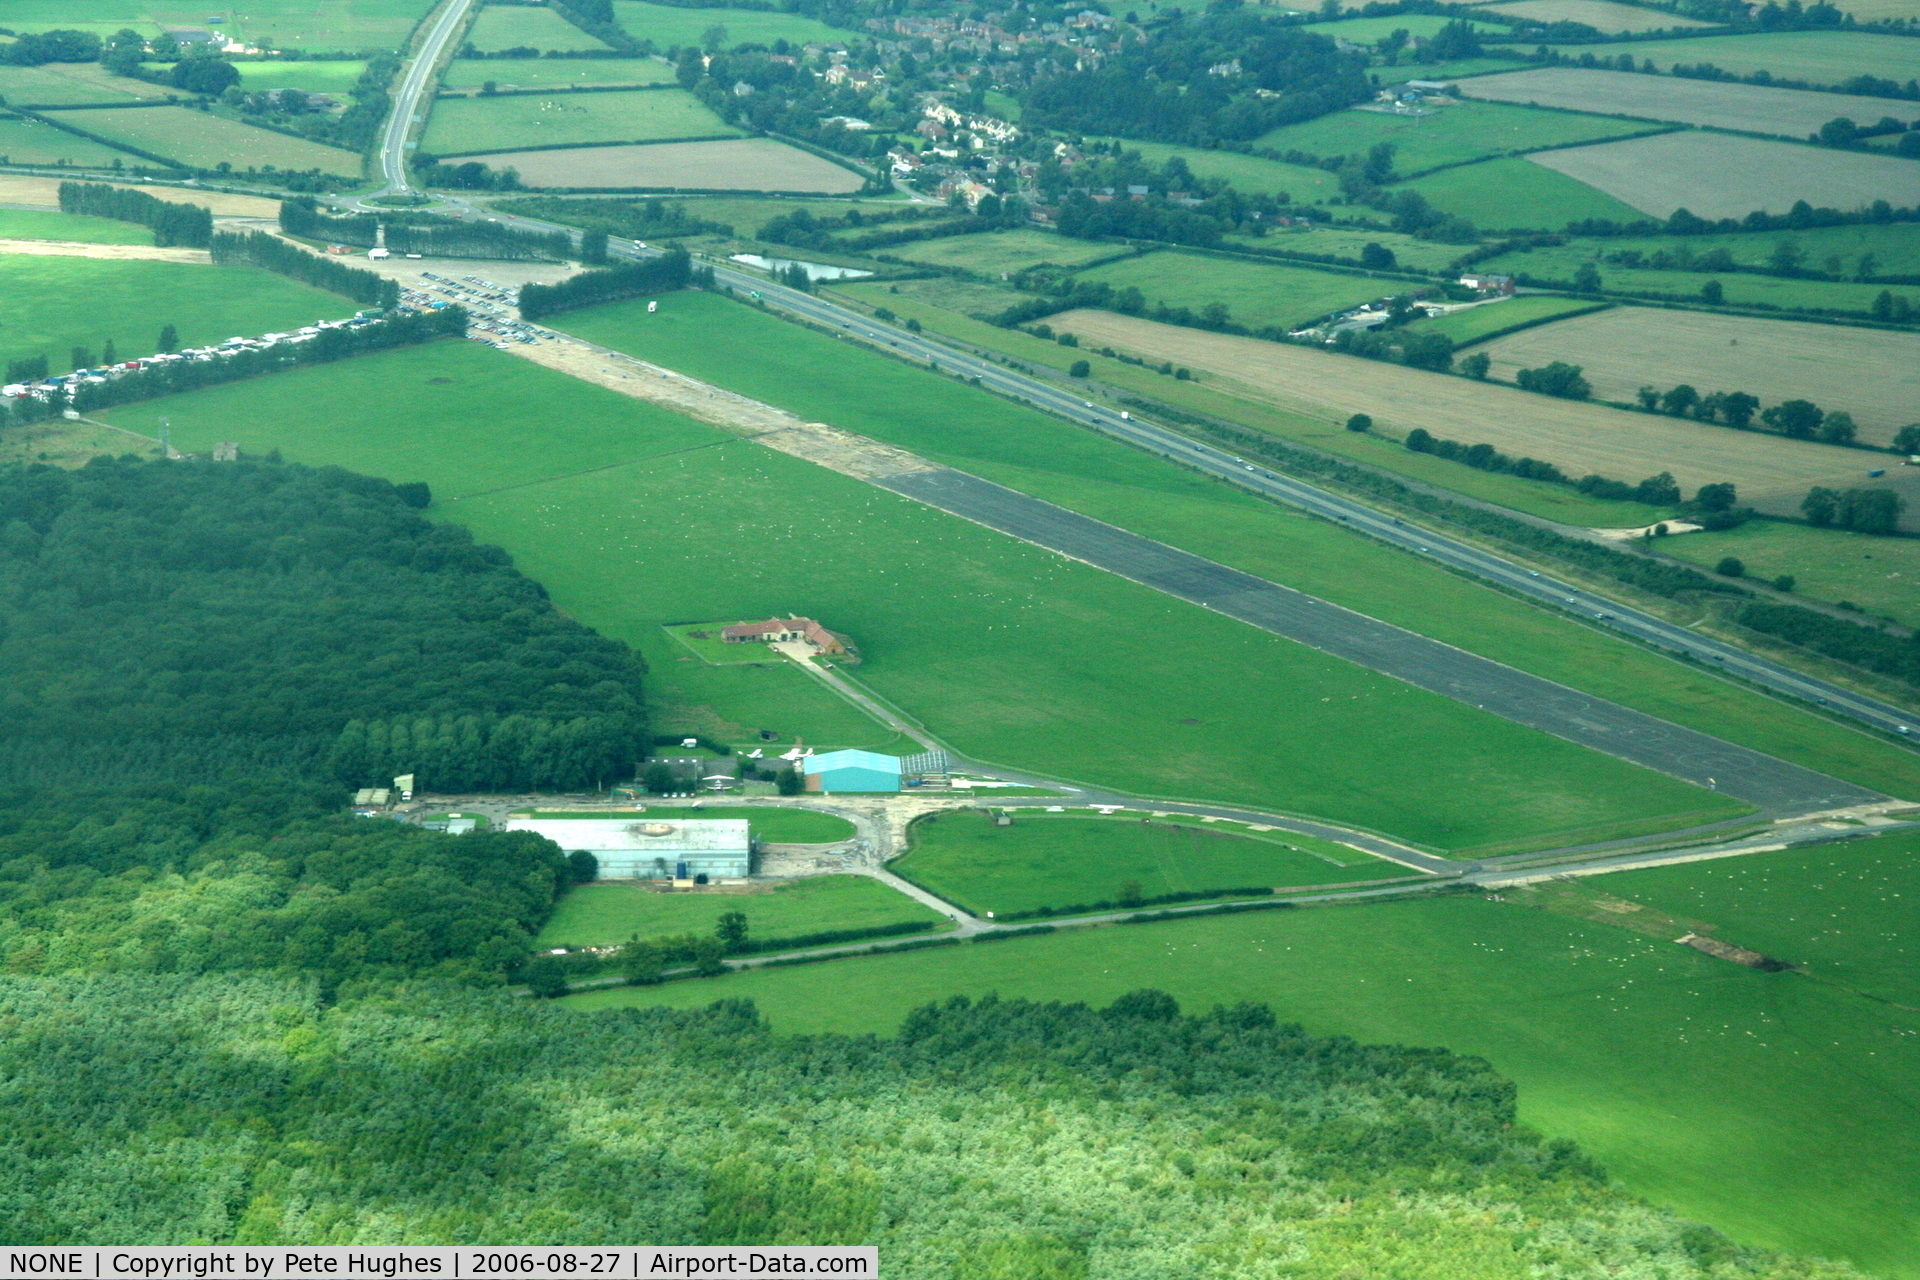 NONE Airport - Finmere Airfield, Bucks, UK